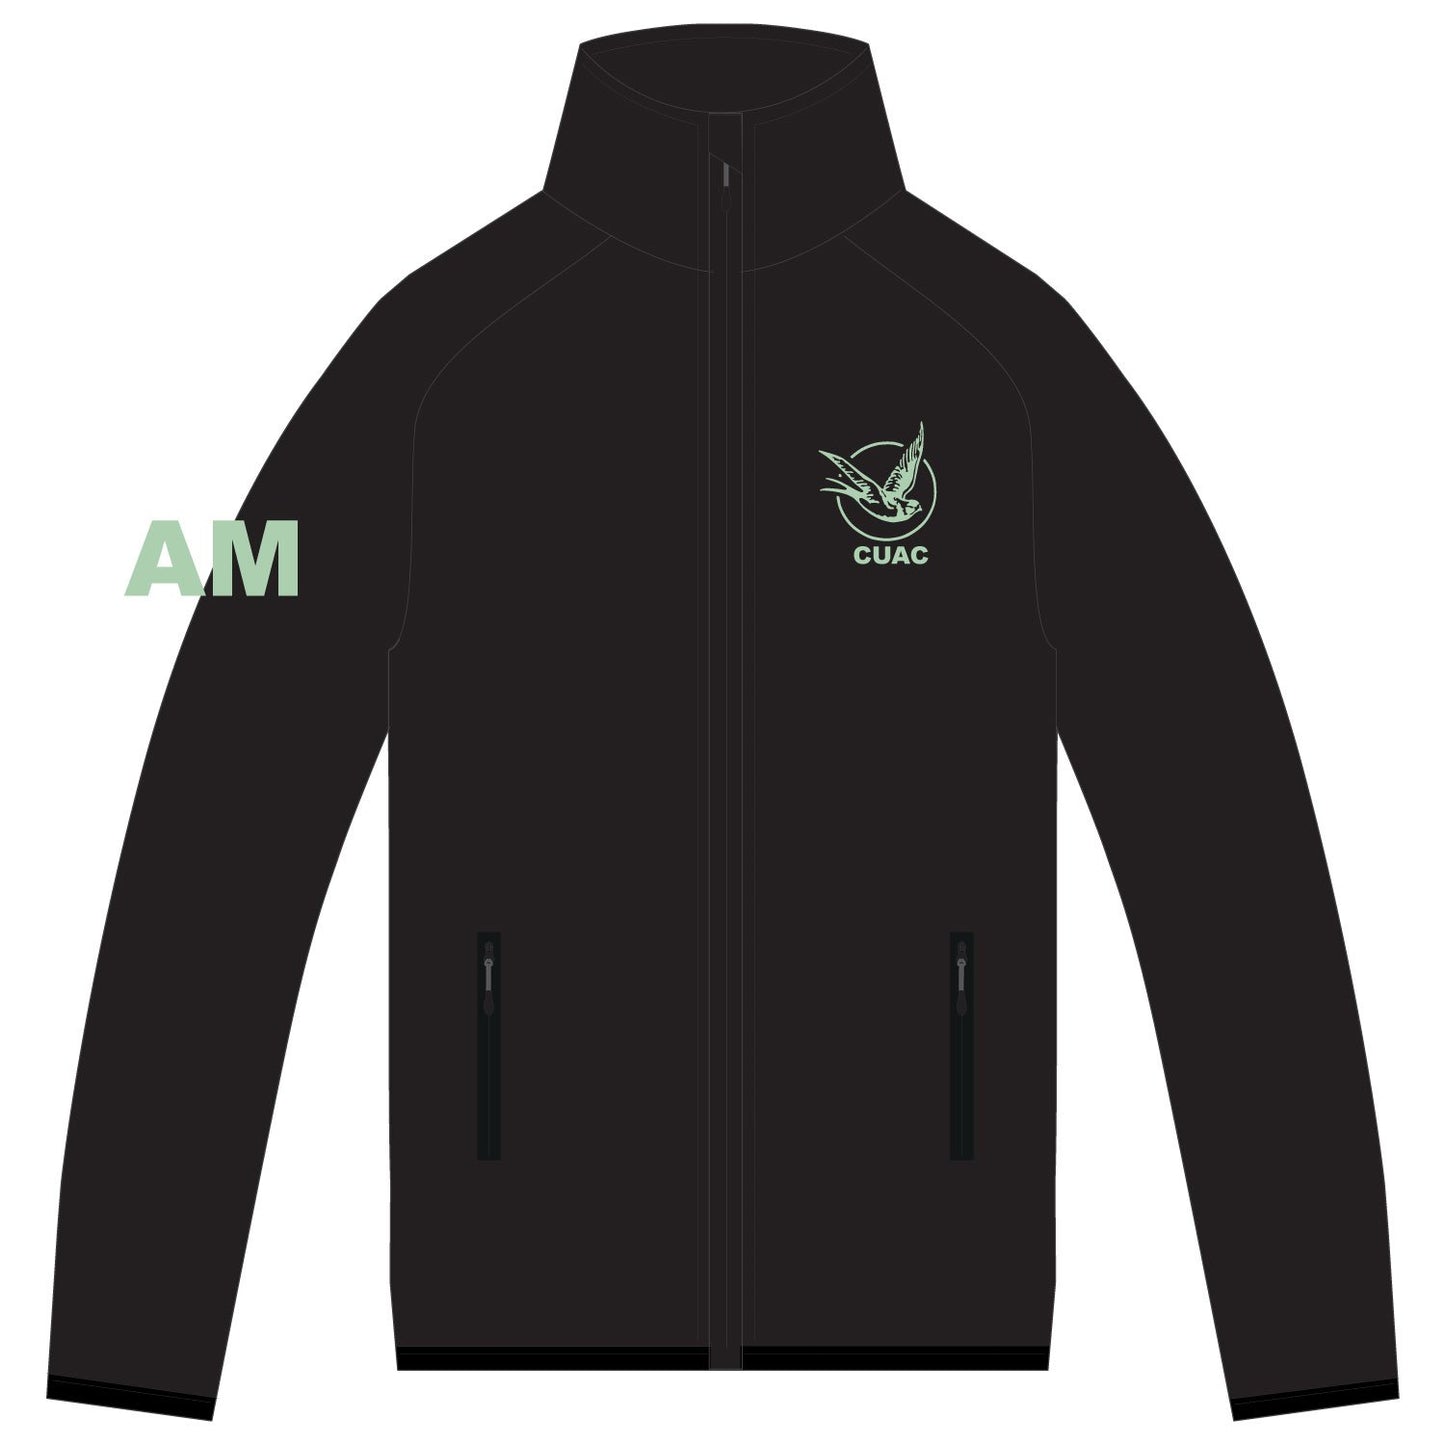 cambridge university automobile club leisure jacket front